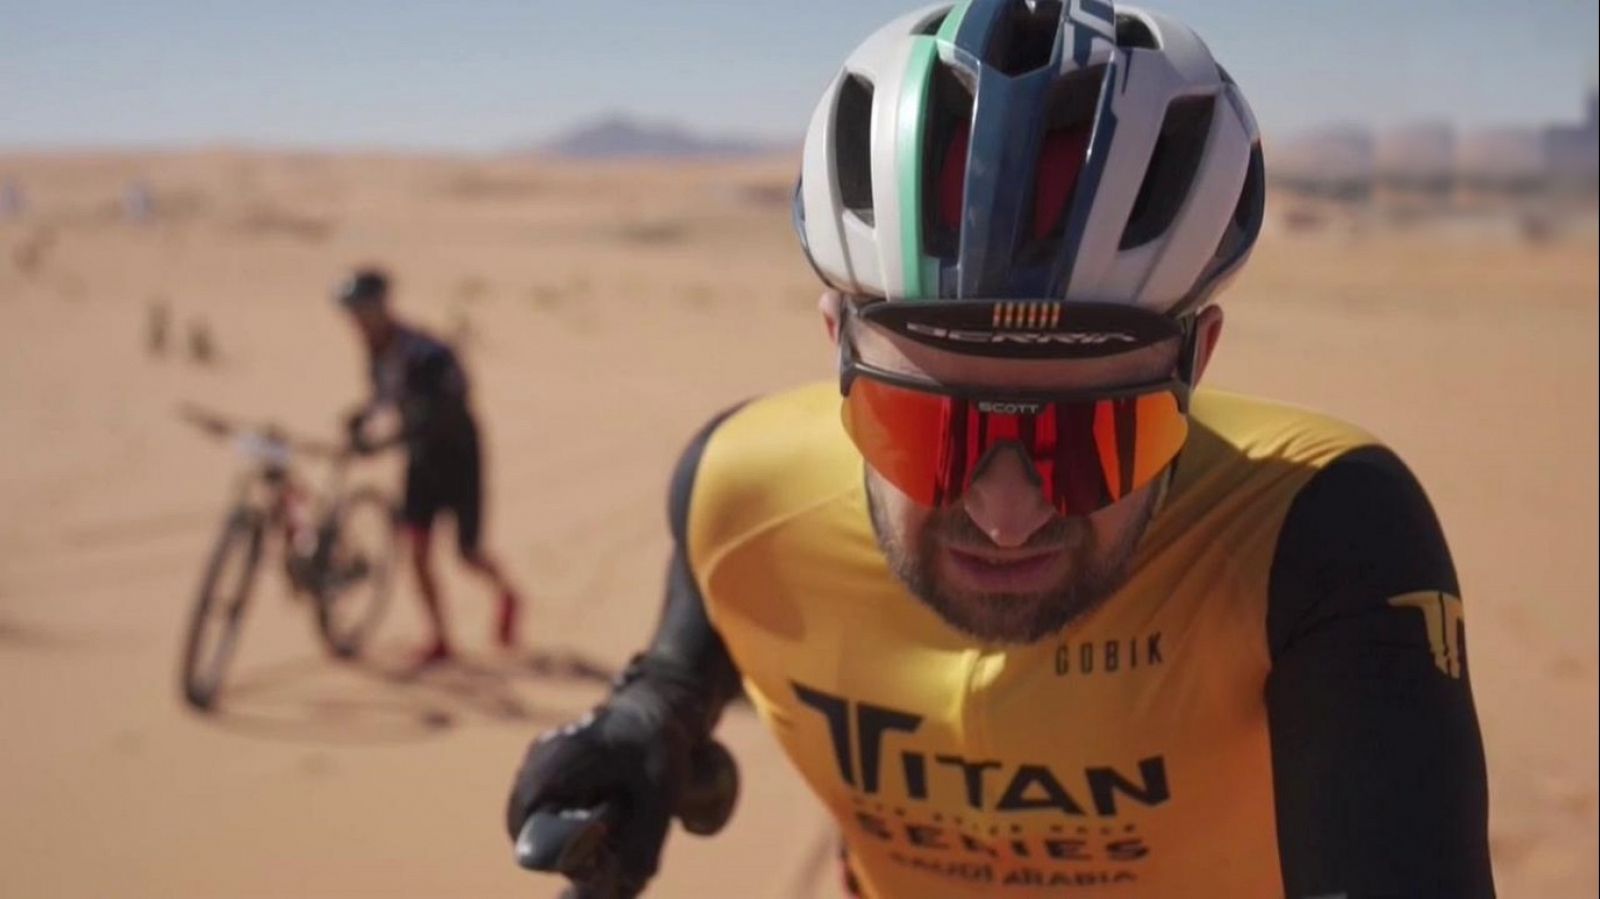 Mountain Bike - Titán Desert Arabia Saudí. Resumen 14/02/20 - RTVE.es